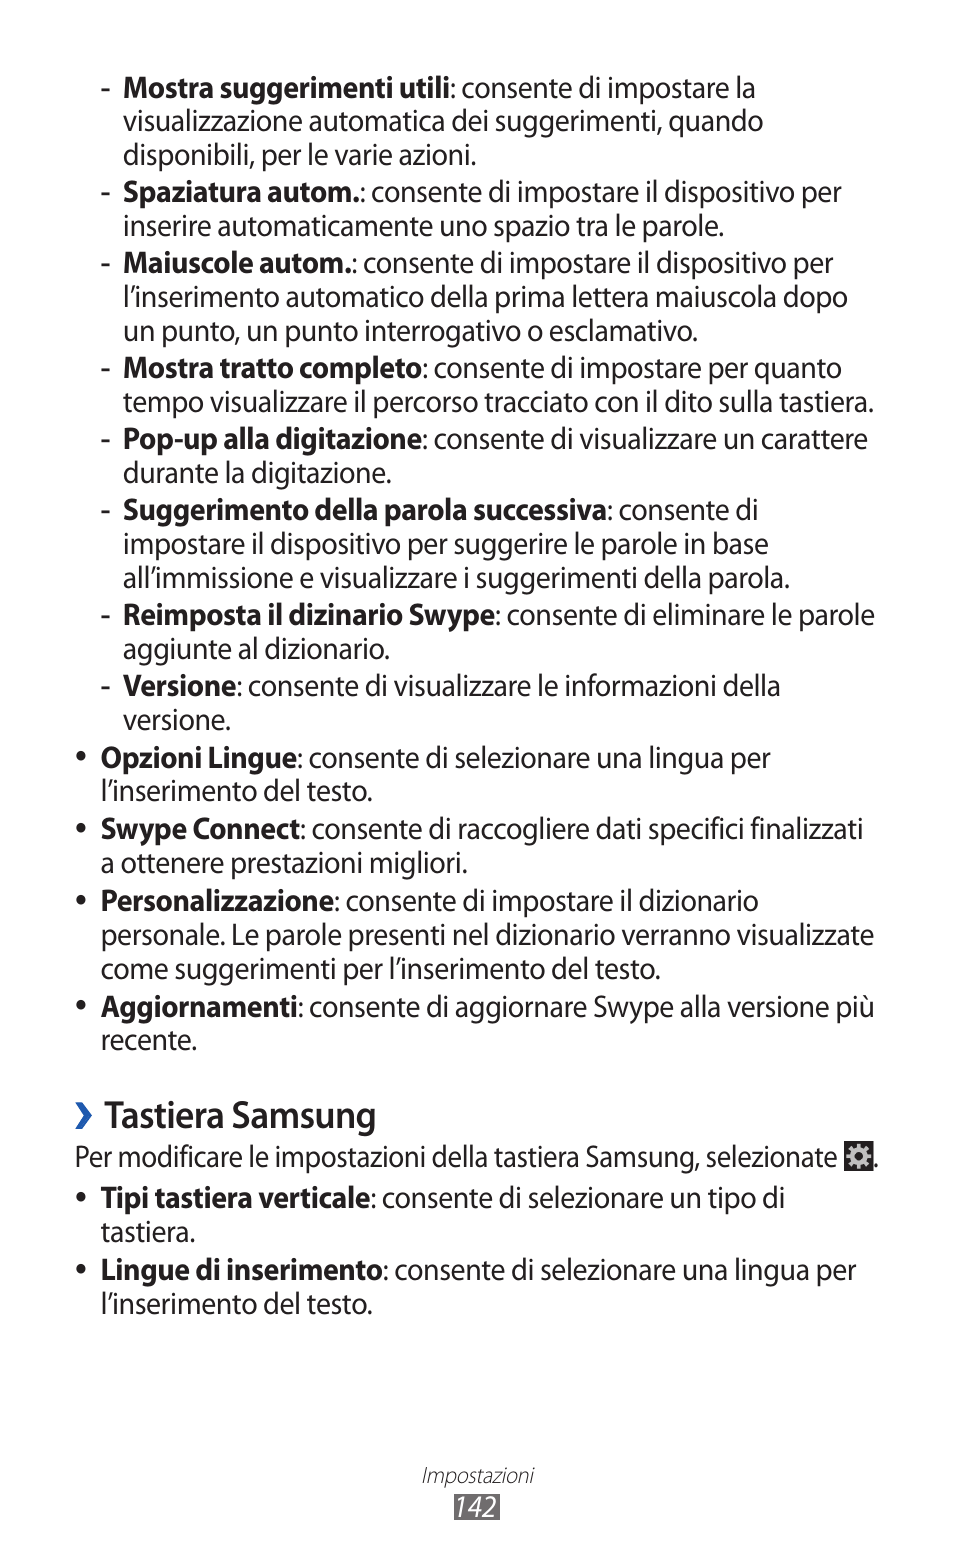 Tastiera samsung | Samsung GT-I9100 Manuale d'uso | Pagina 142 / 161